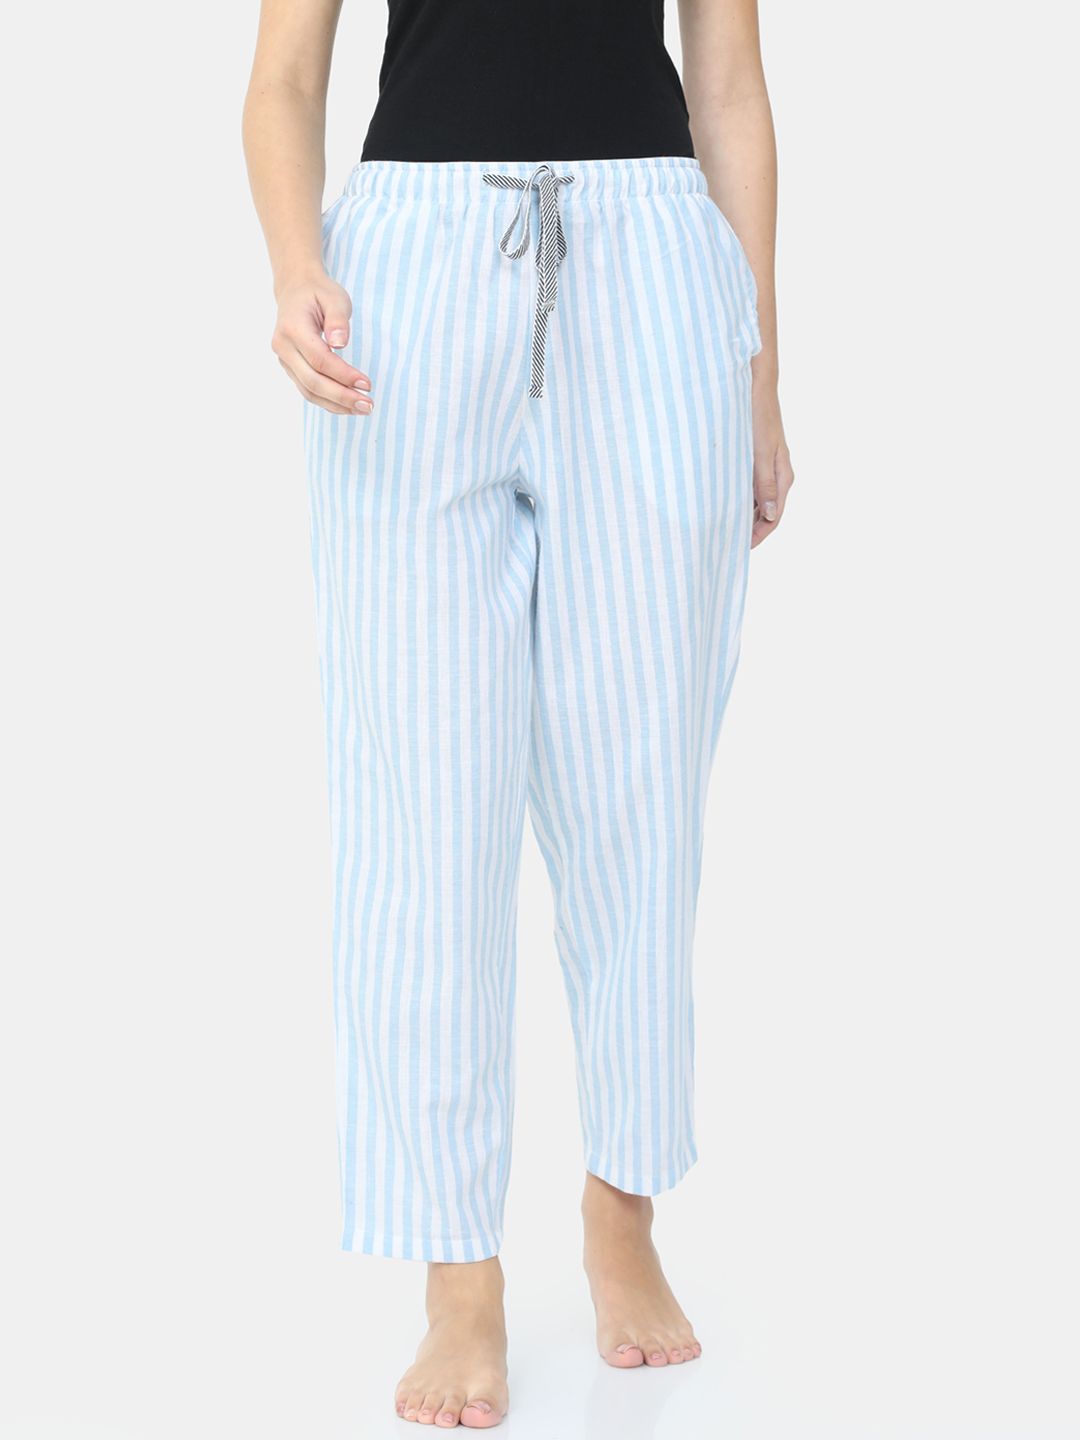 Bareblow Women Blue & White Striped Lounge Pants Price in India